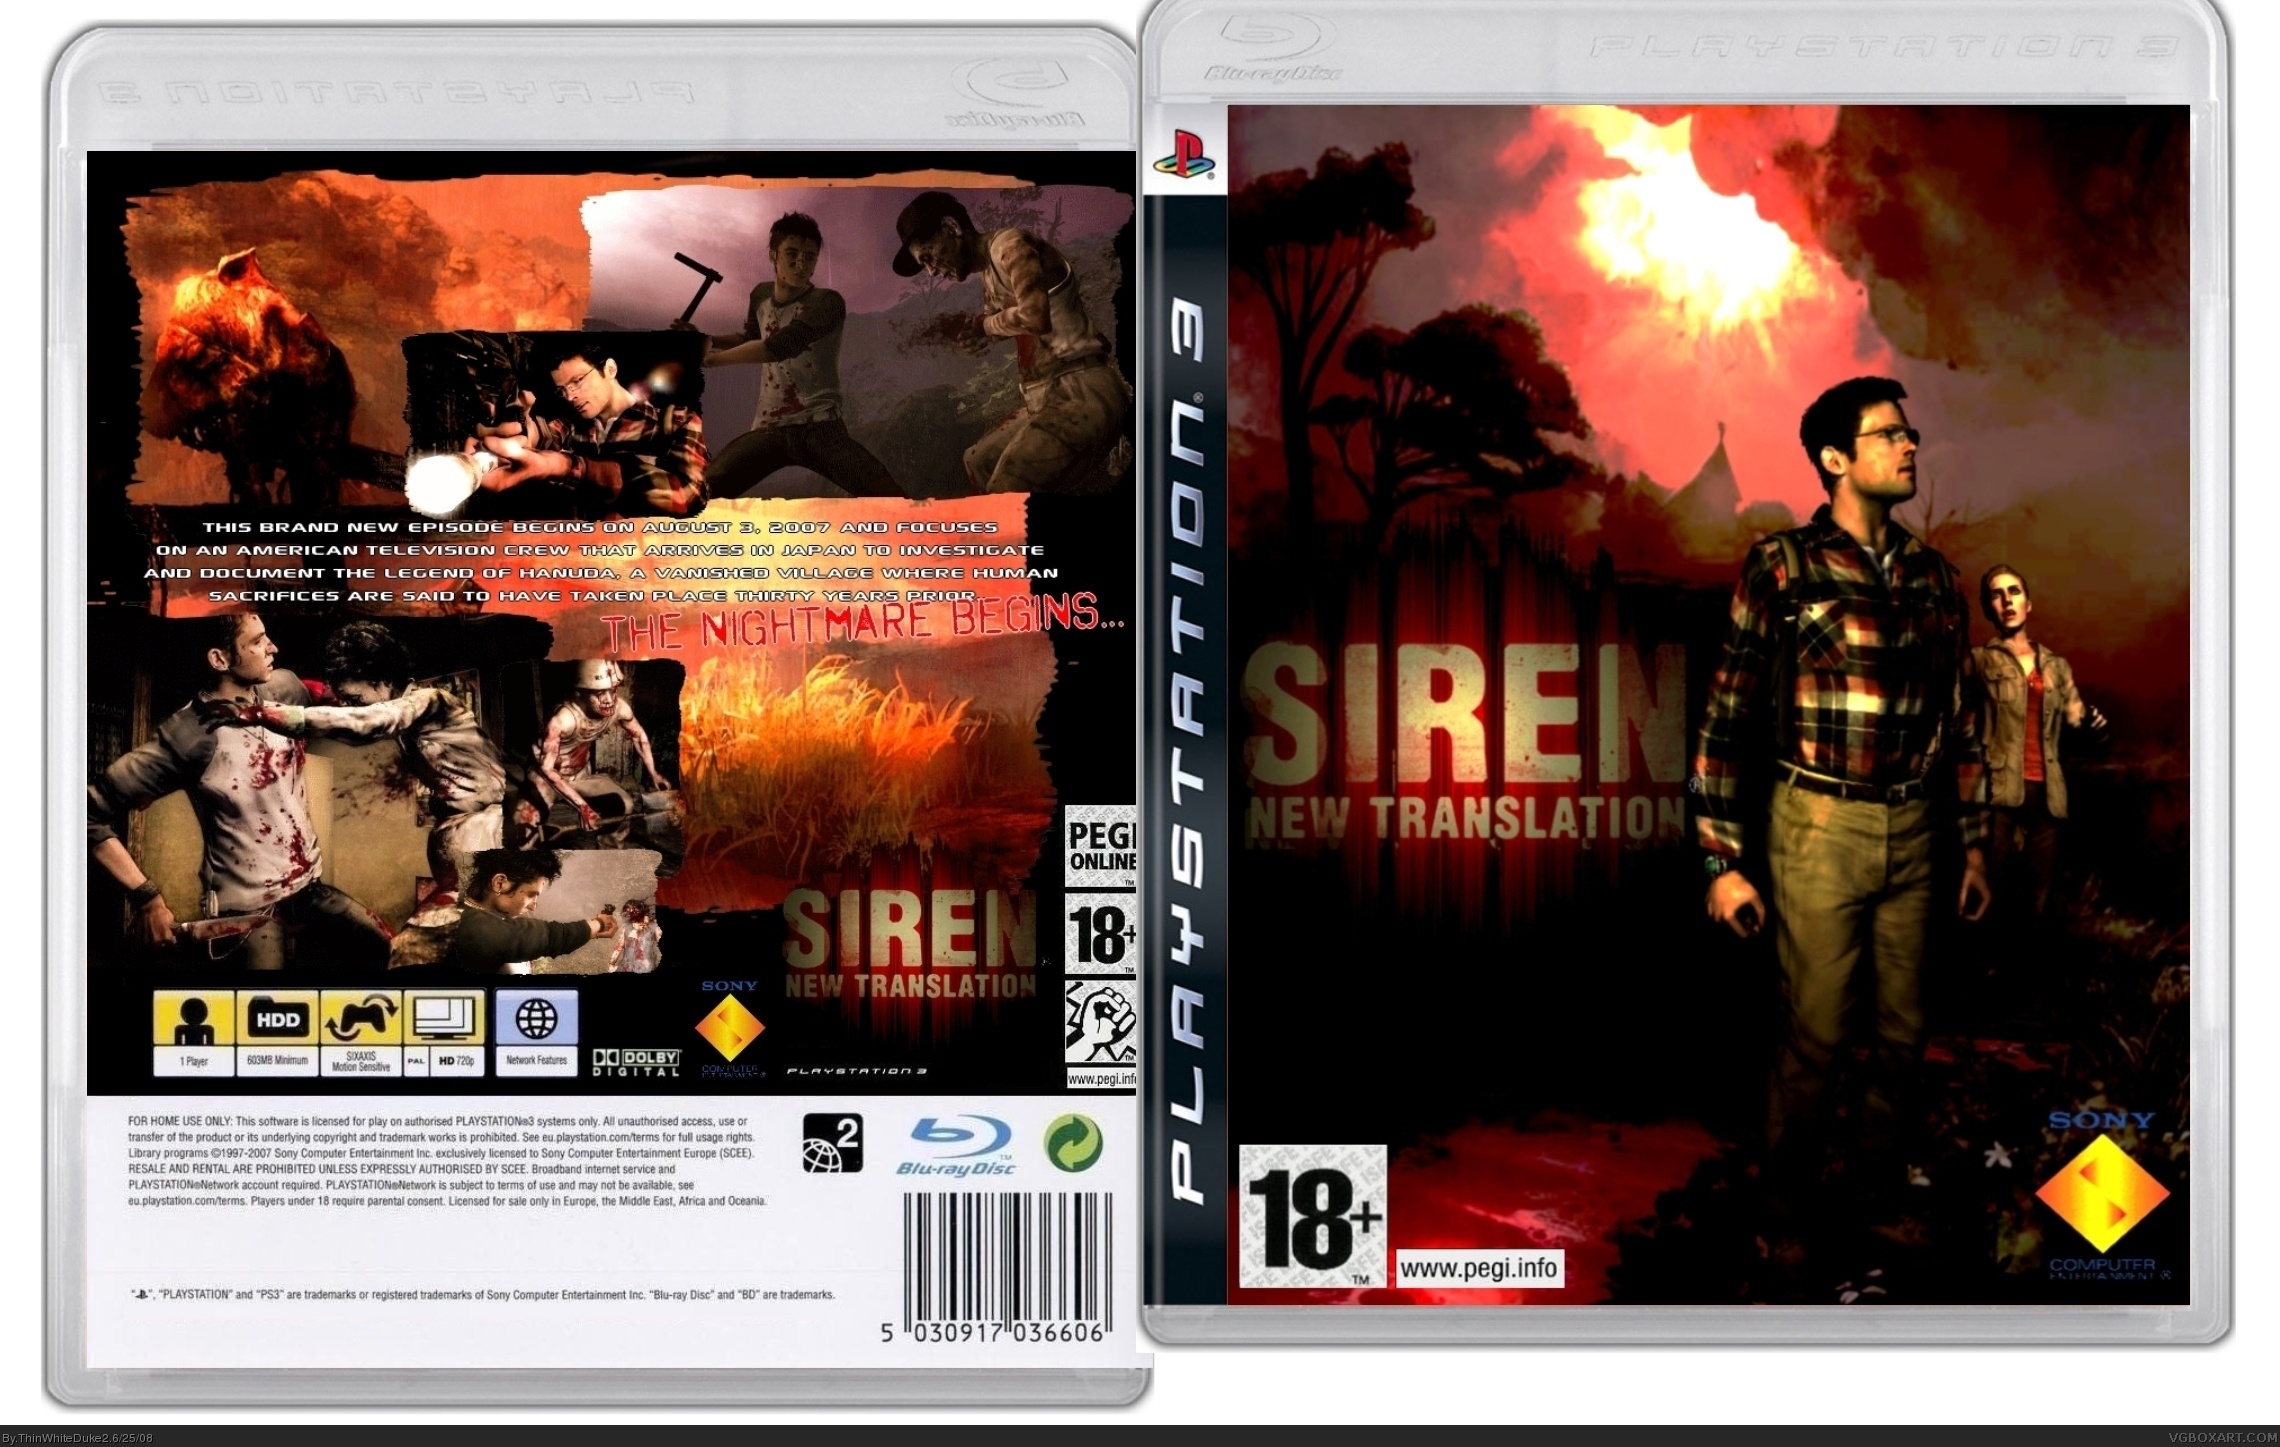 Siren 3 new translation (blood curse) box cover